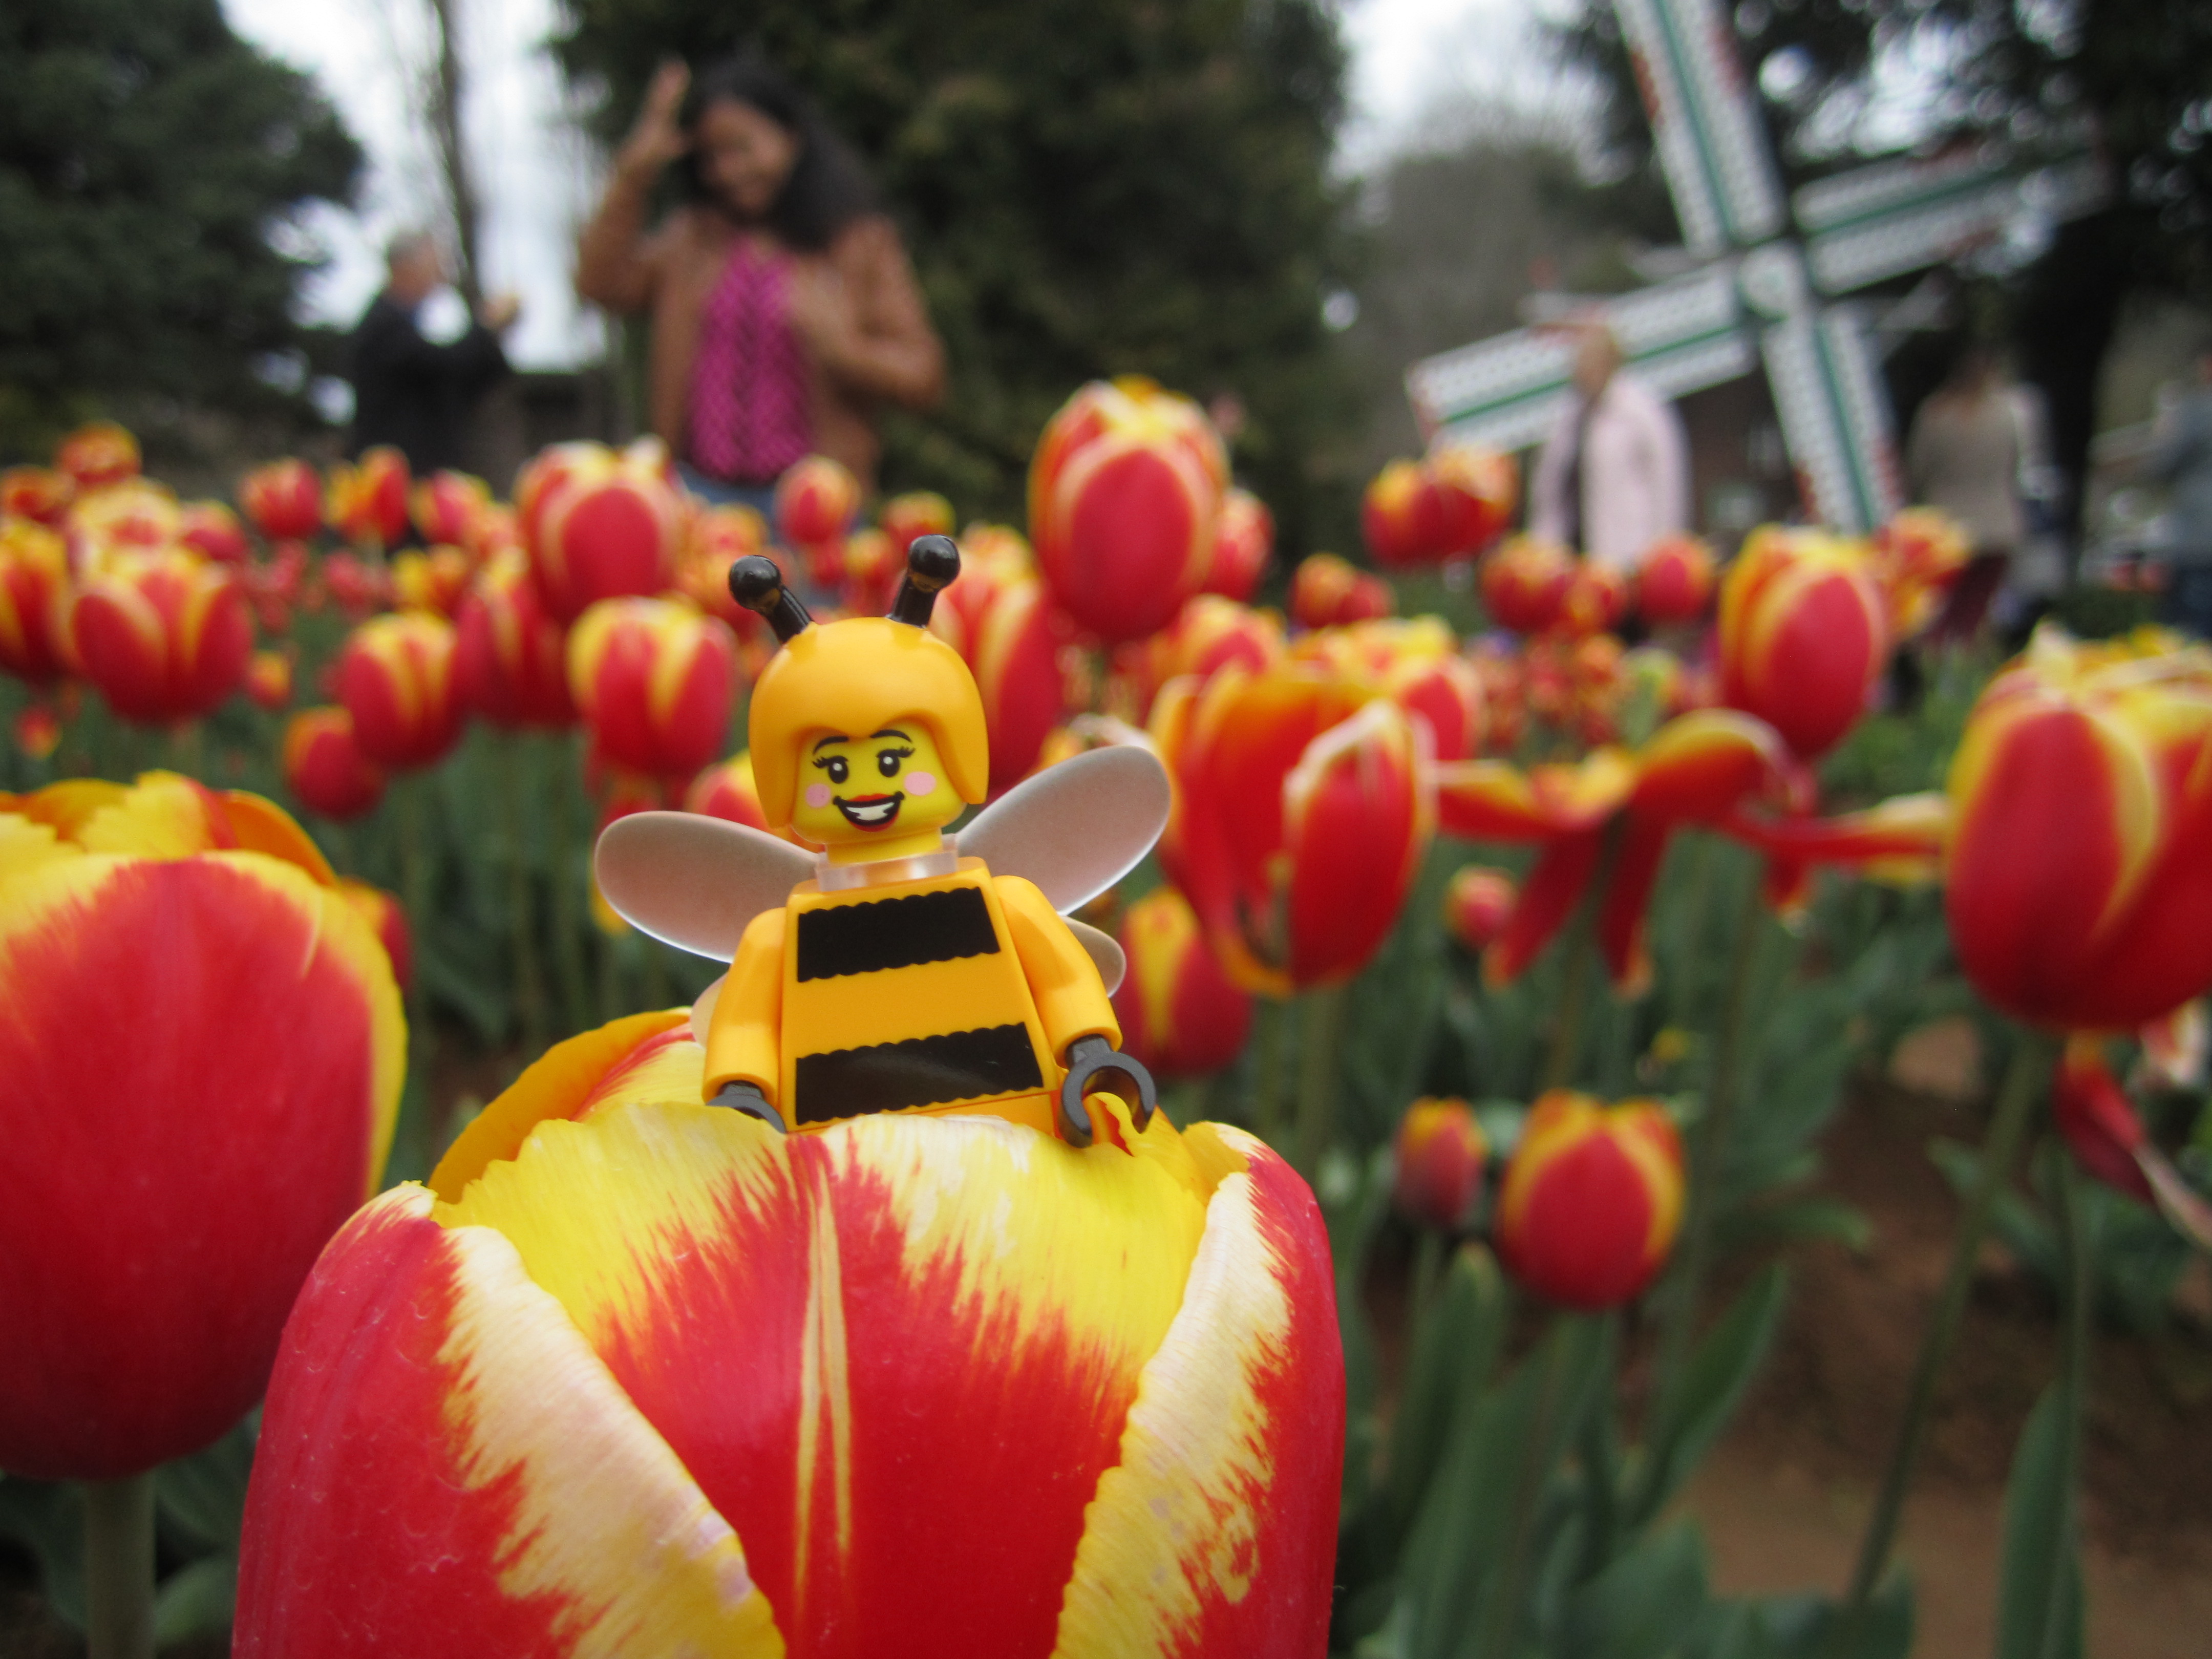 2x Lego tulip sets